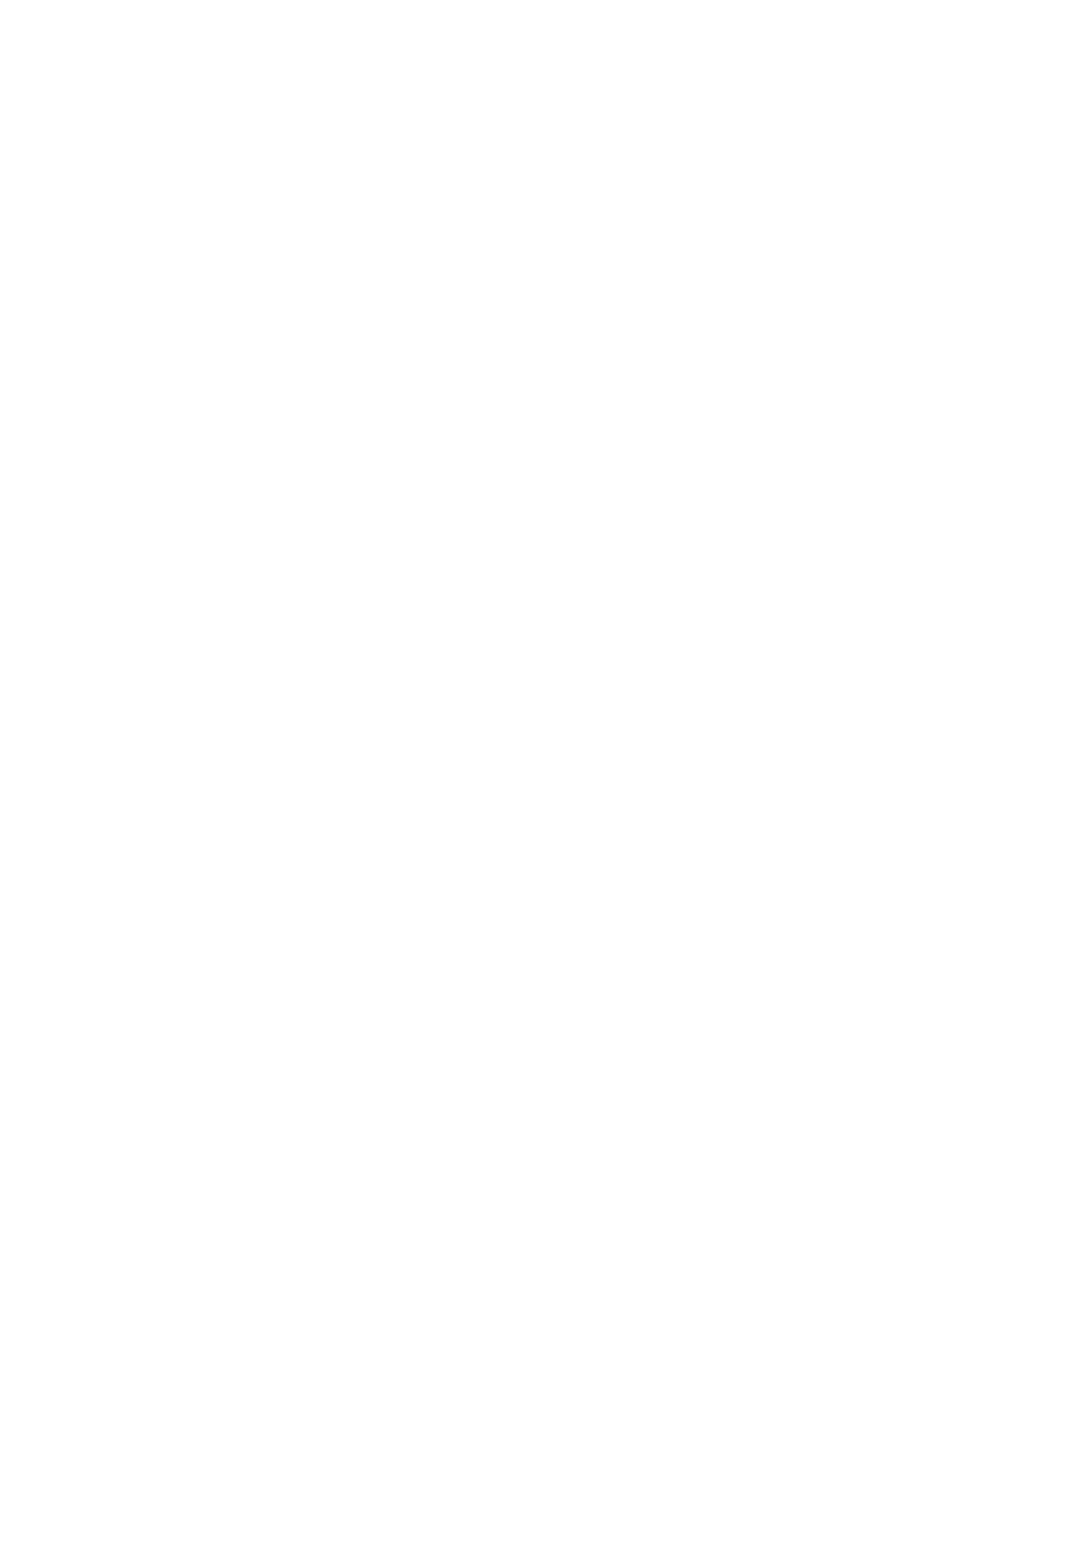 Athira Pharma logo for dark backgrounds (transparent PNG)